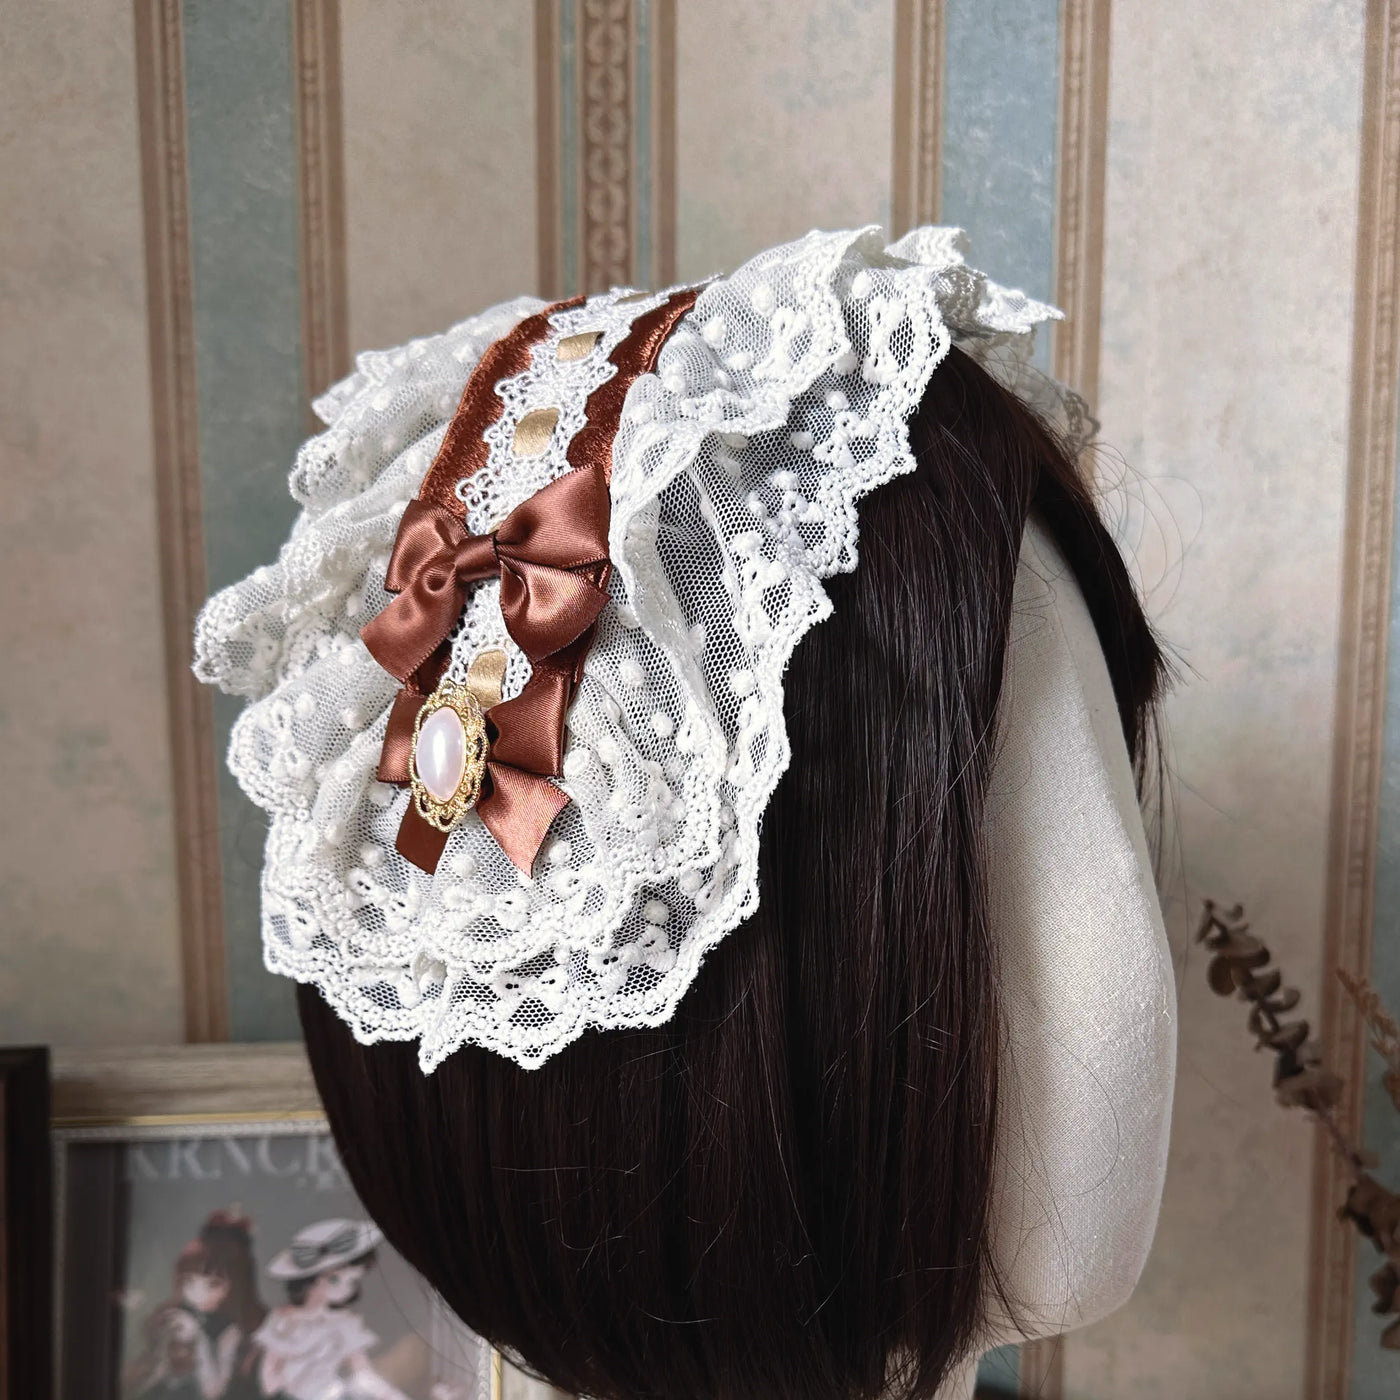 Krncrlo~Cello Vintage Elegant 3 Tiered Lolita Jumper Skirt S chocolate hairband 